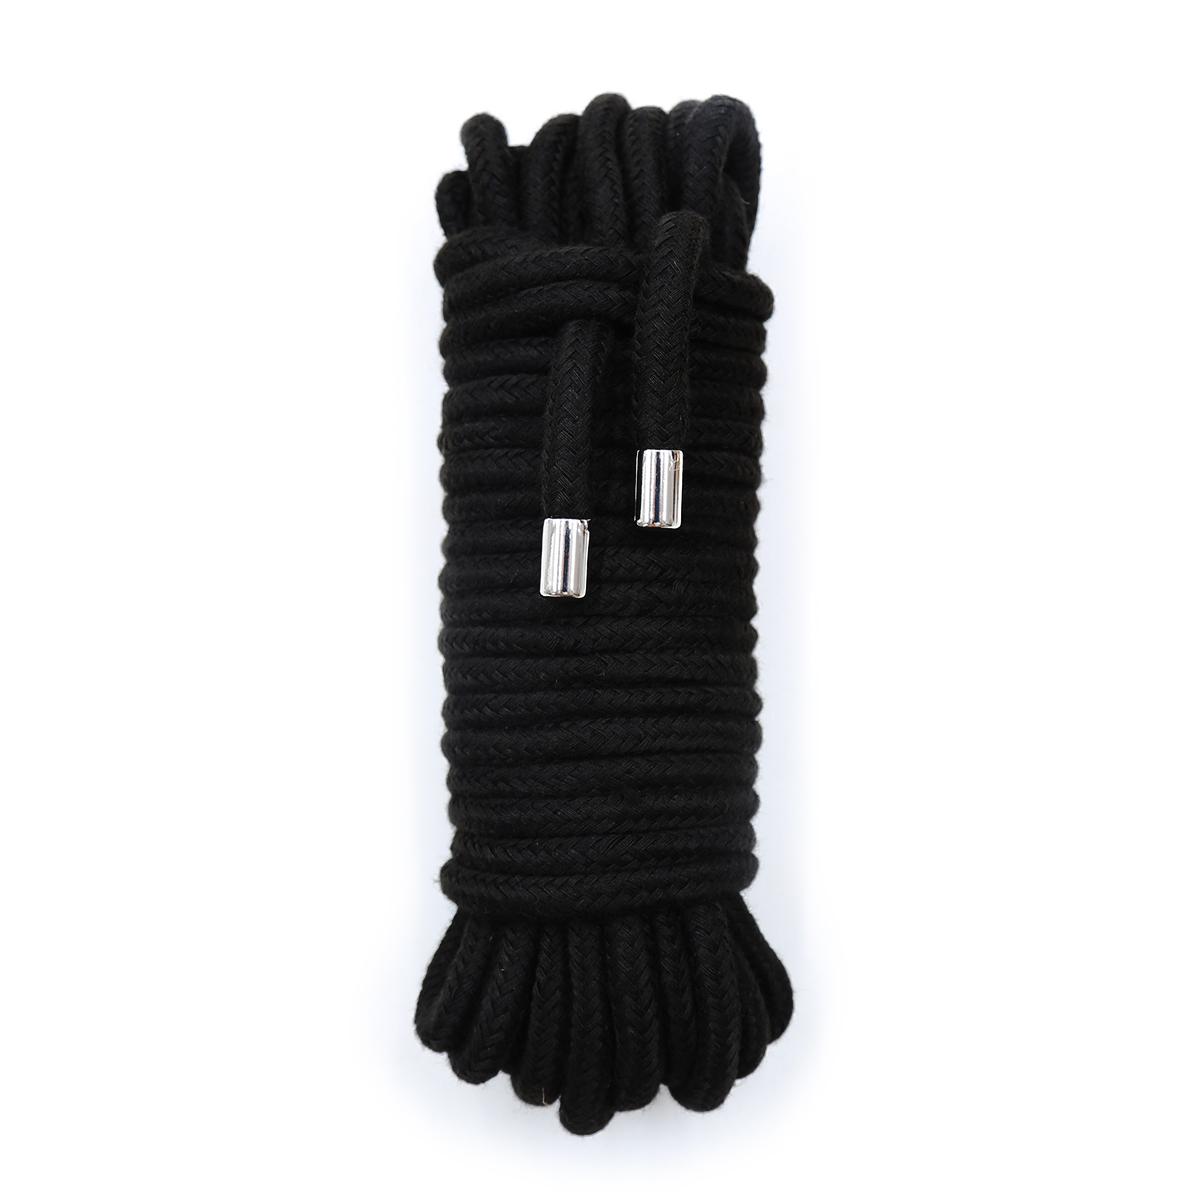 20-Meter-BDSM-Cotton-Rope-Black-OPR-321048-1